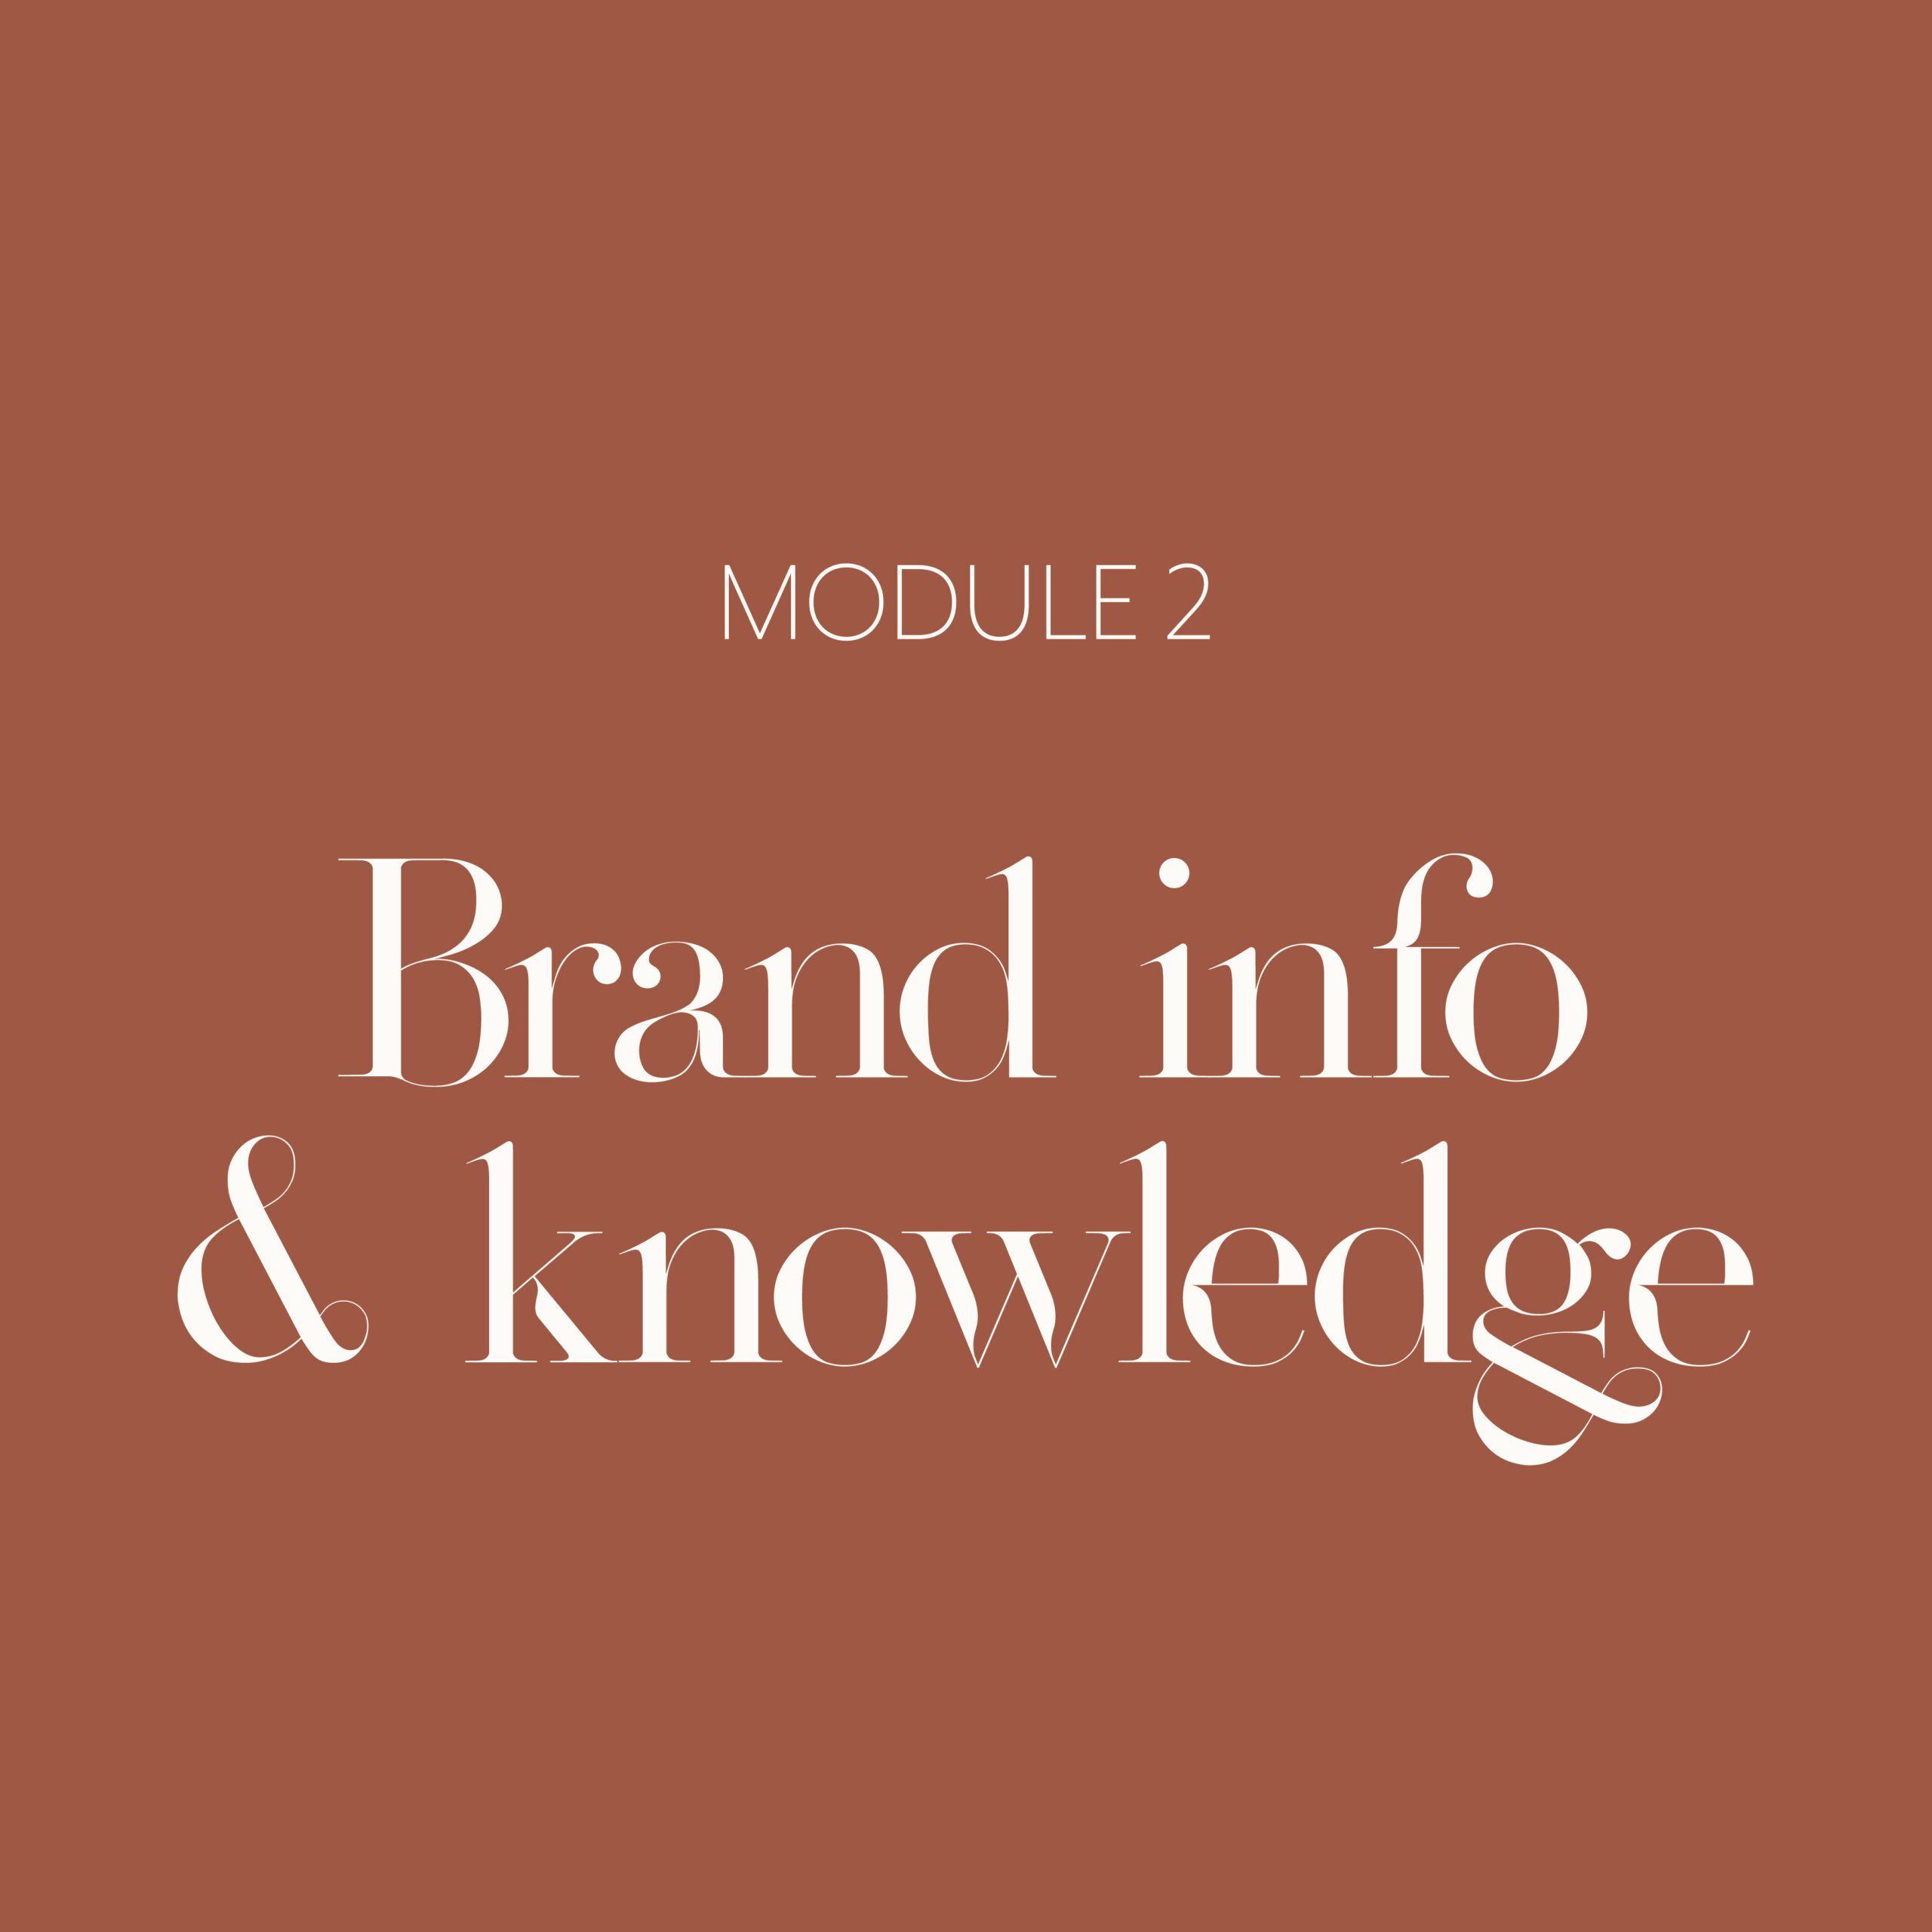 Brand info & knowledge